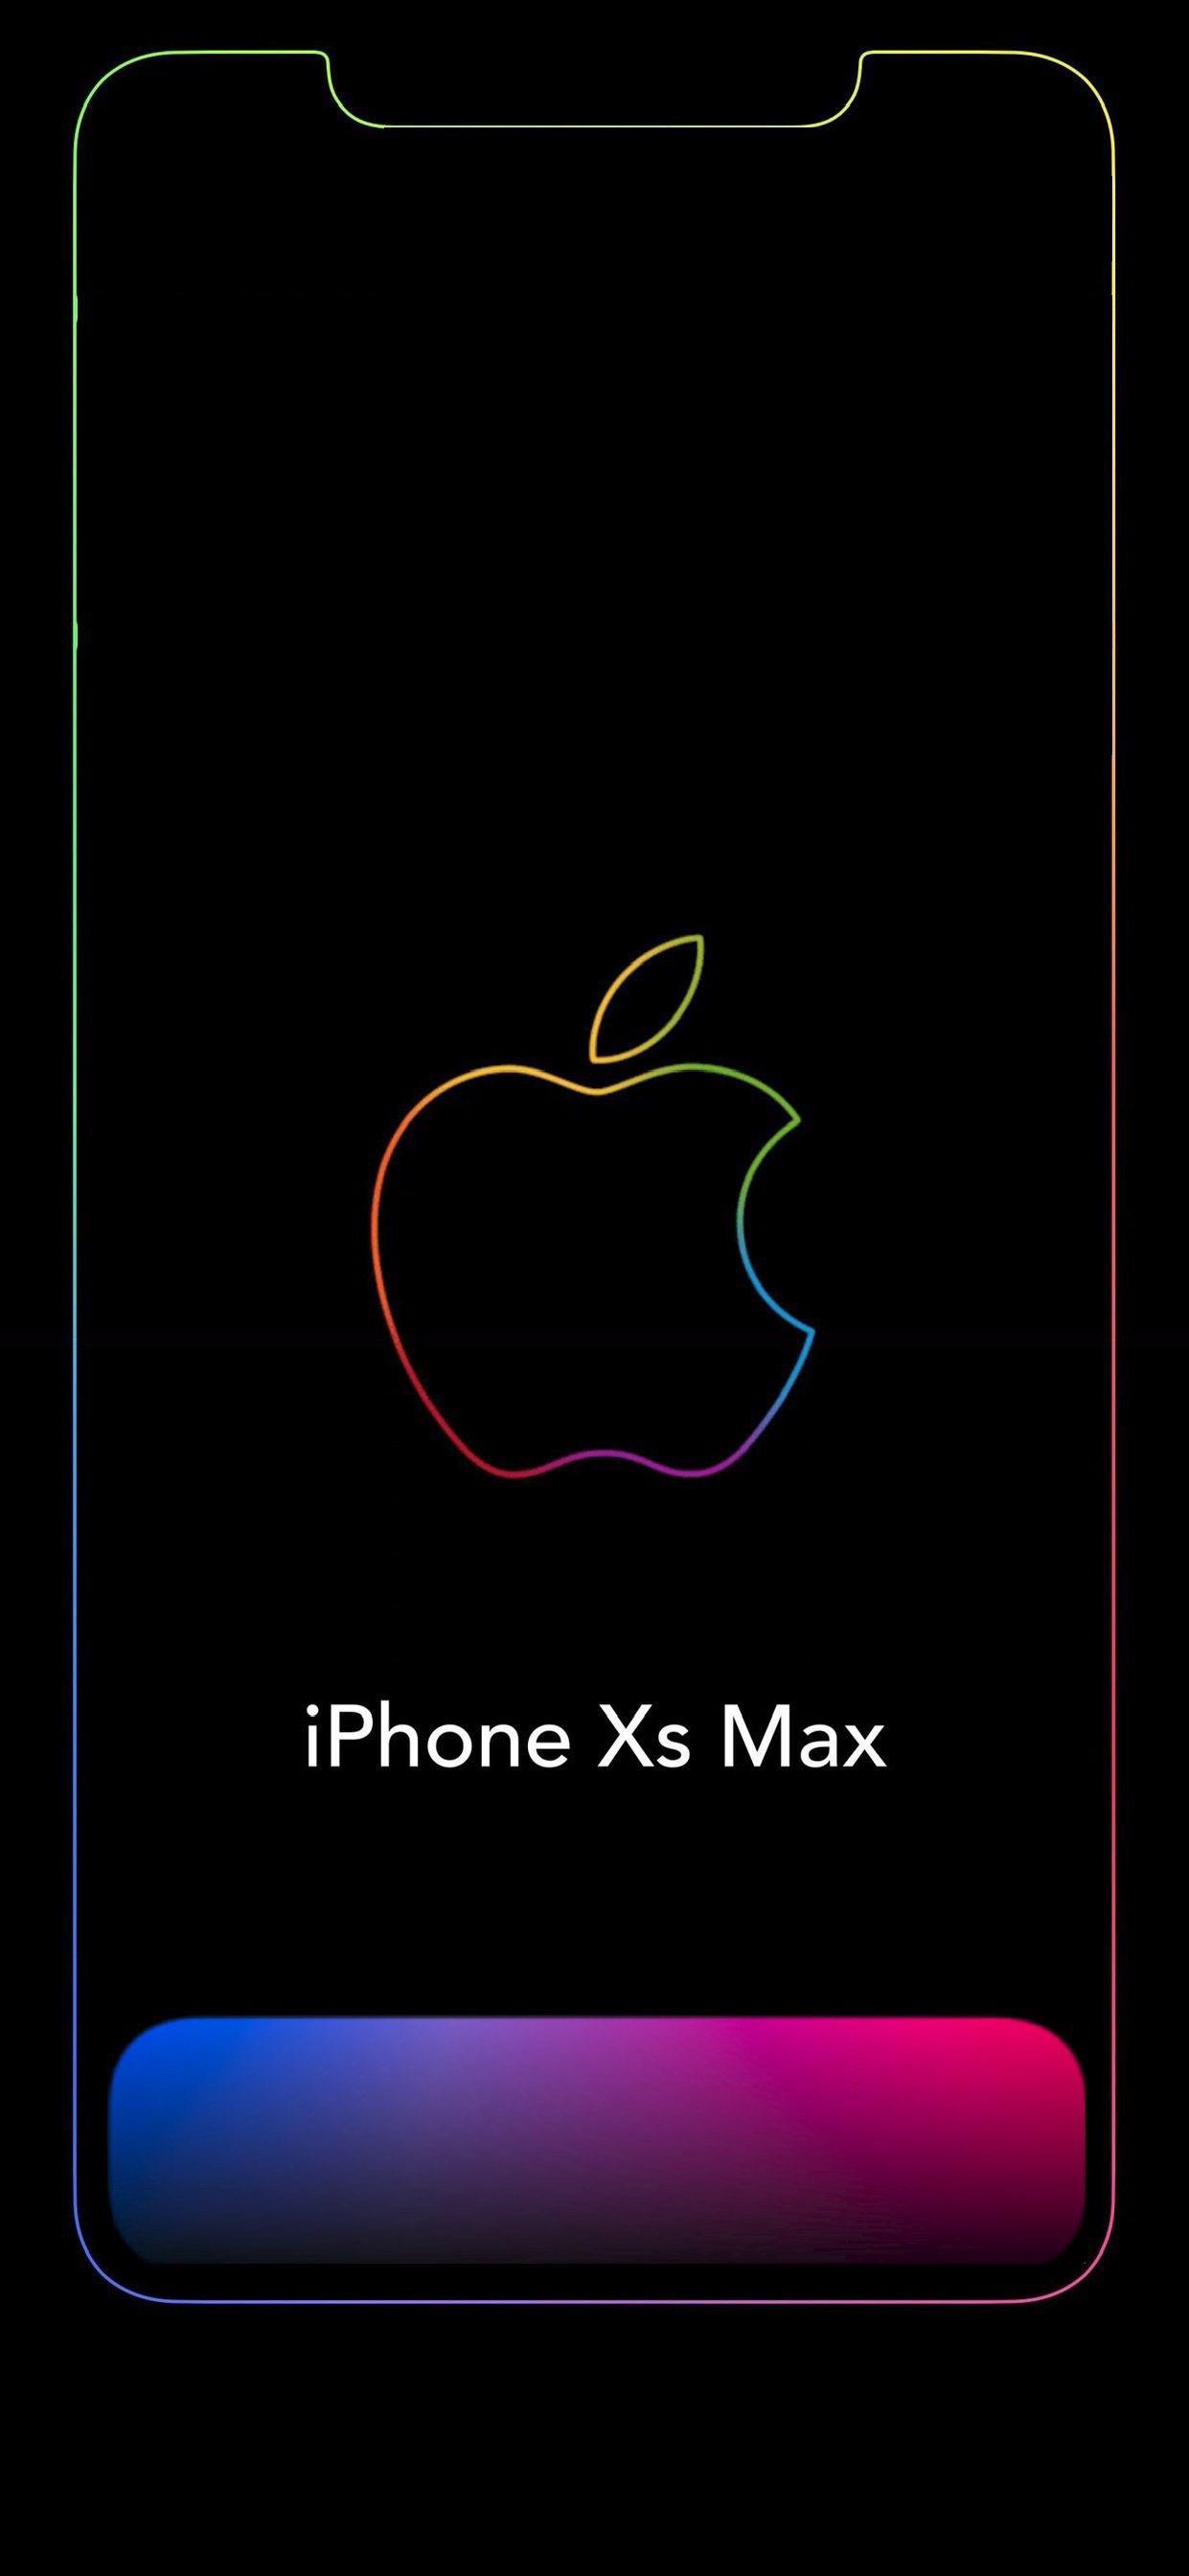 iPhone Xs Max Home Screen Wallpaper Logo Home Screen